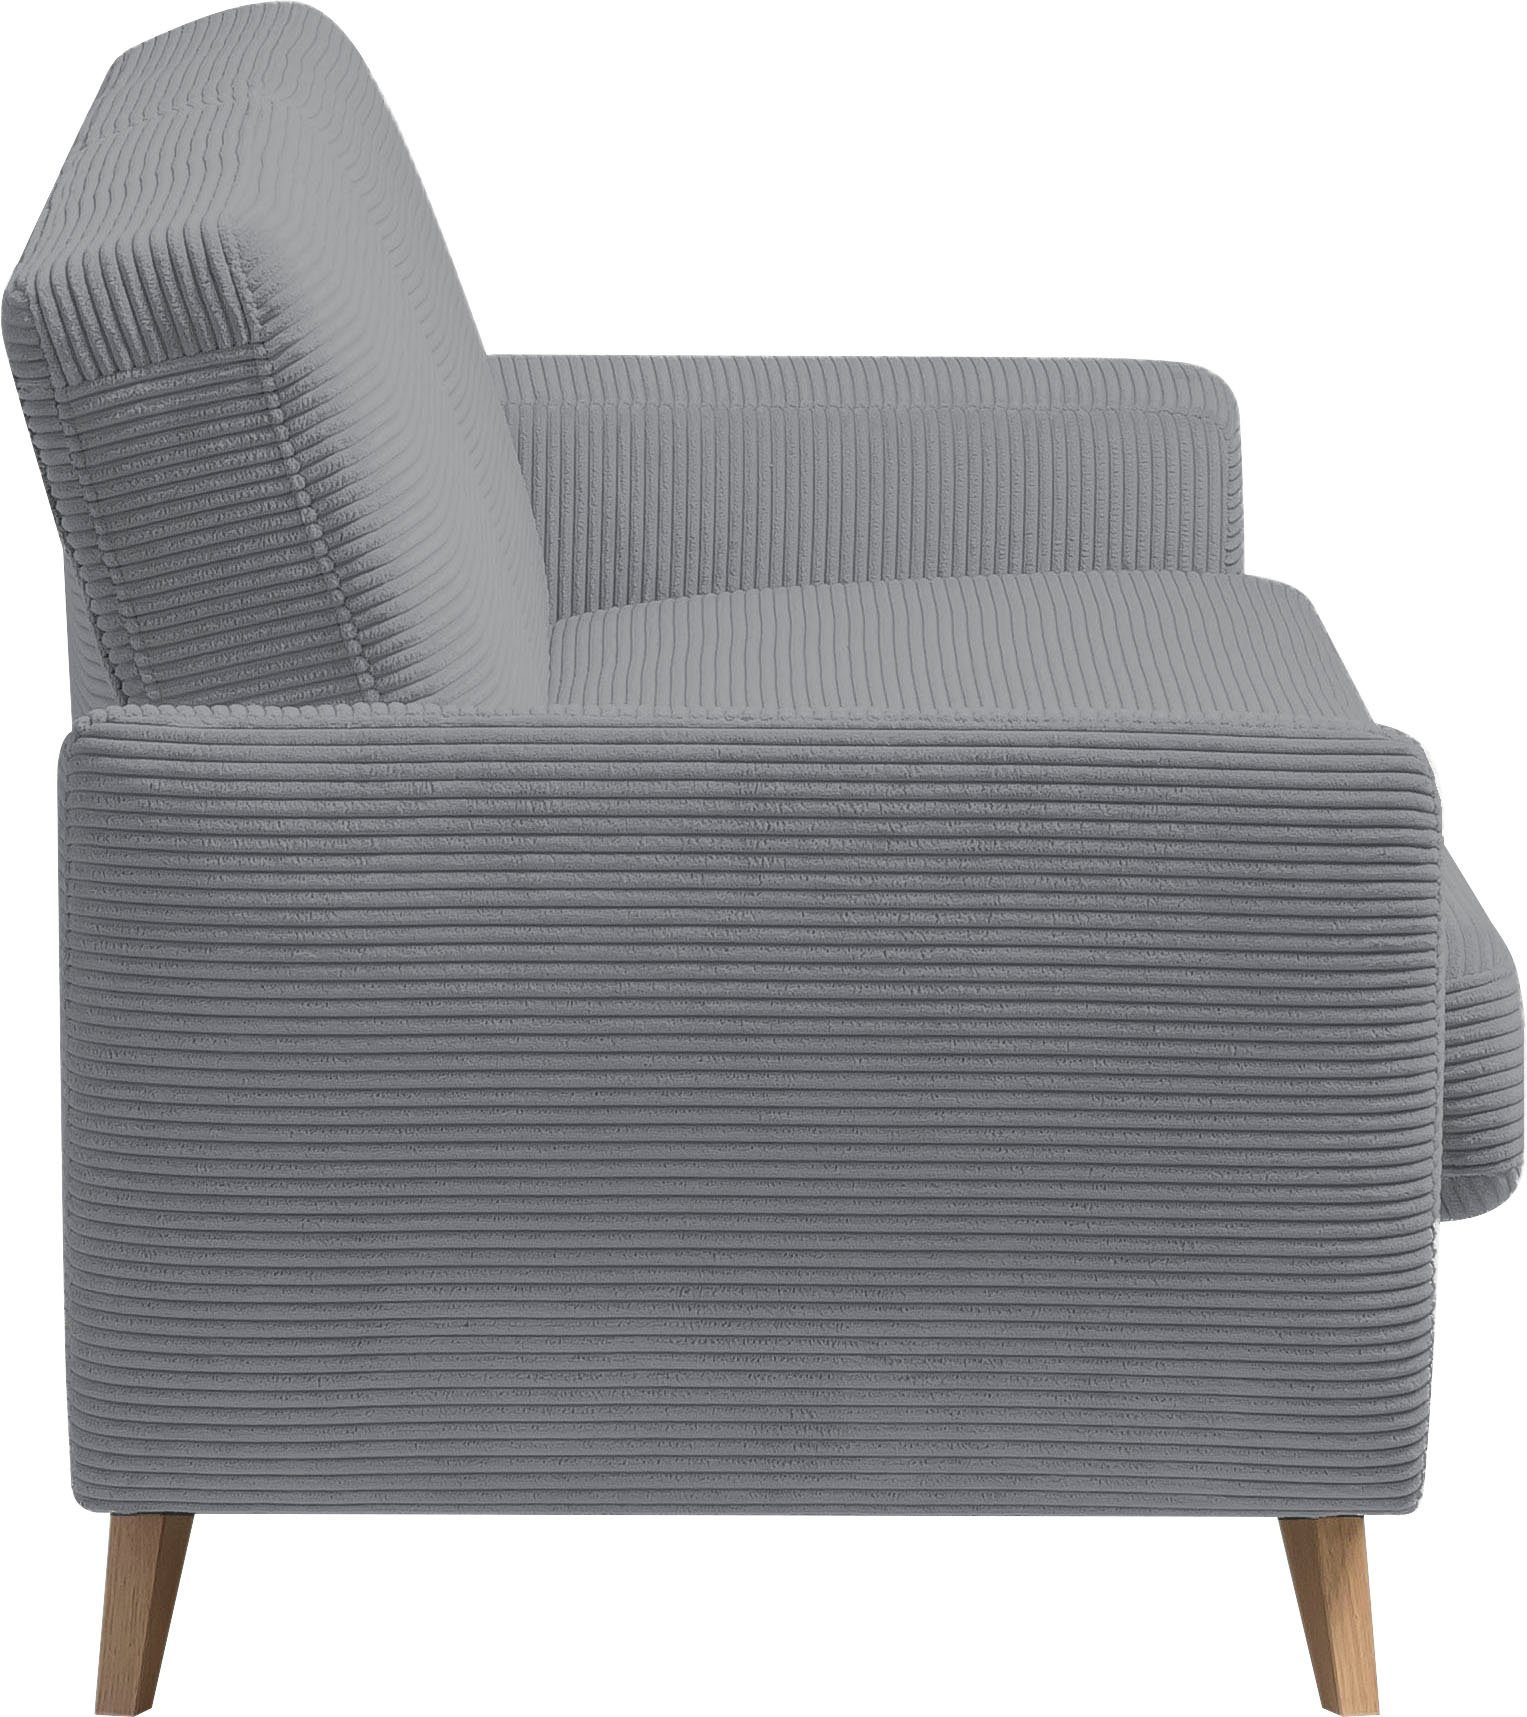 Bettkasten 3-Sitzer grey - Samso, und sofa fashion Inklusive exxpo Bettfunktion